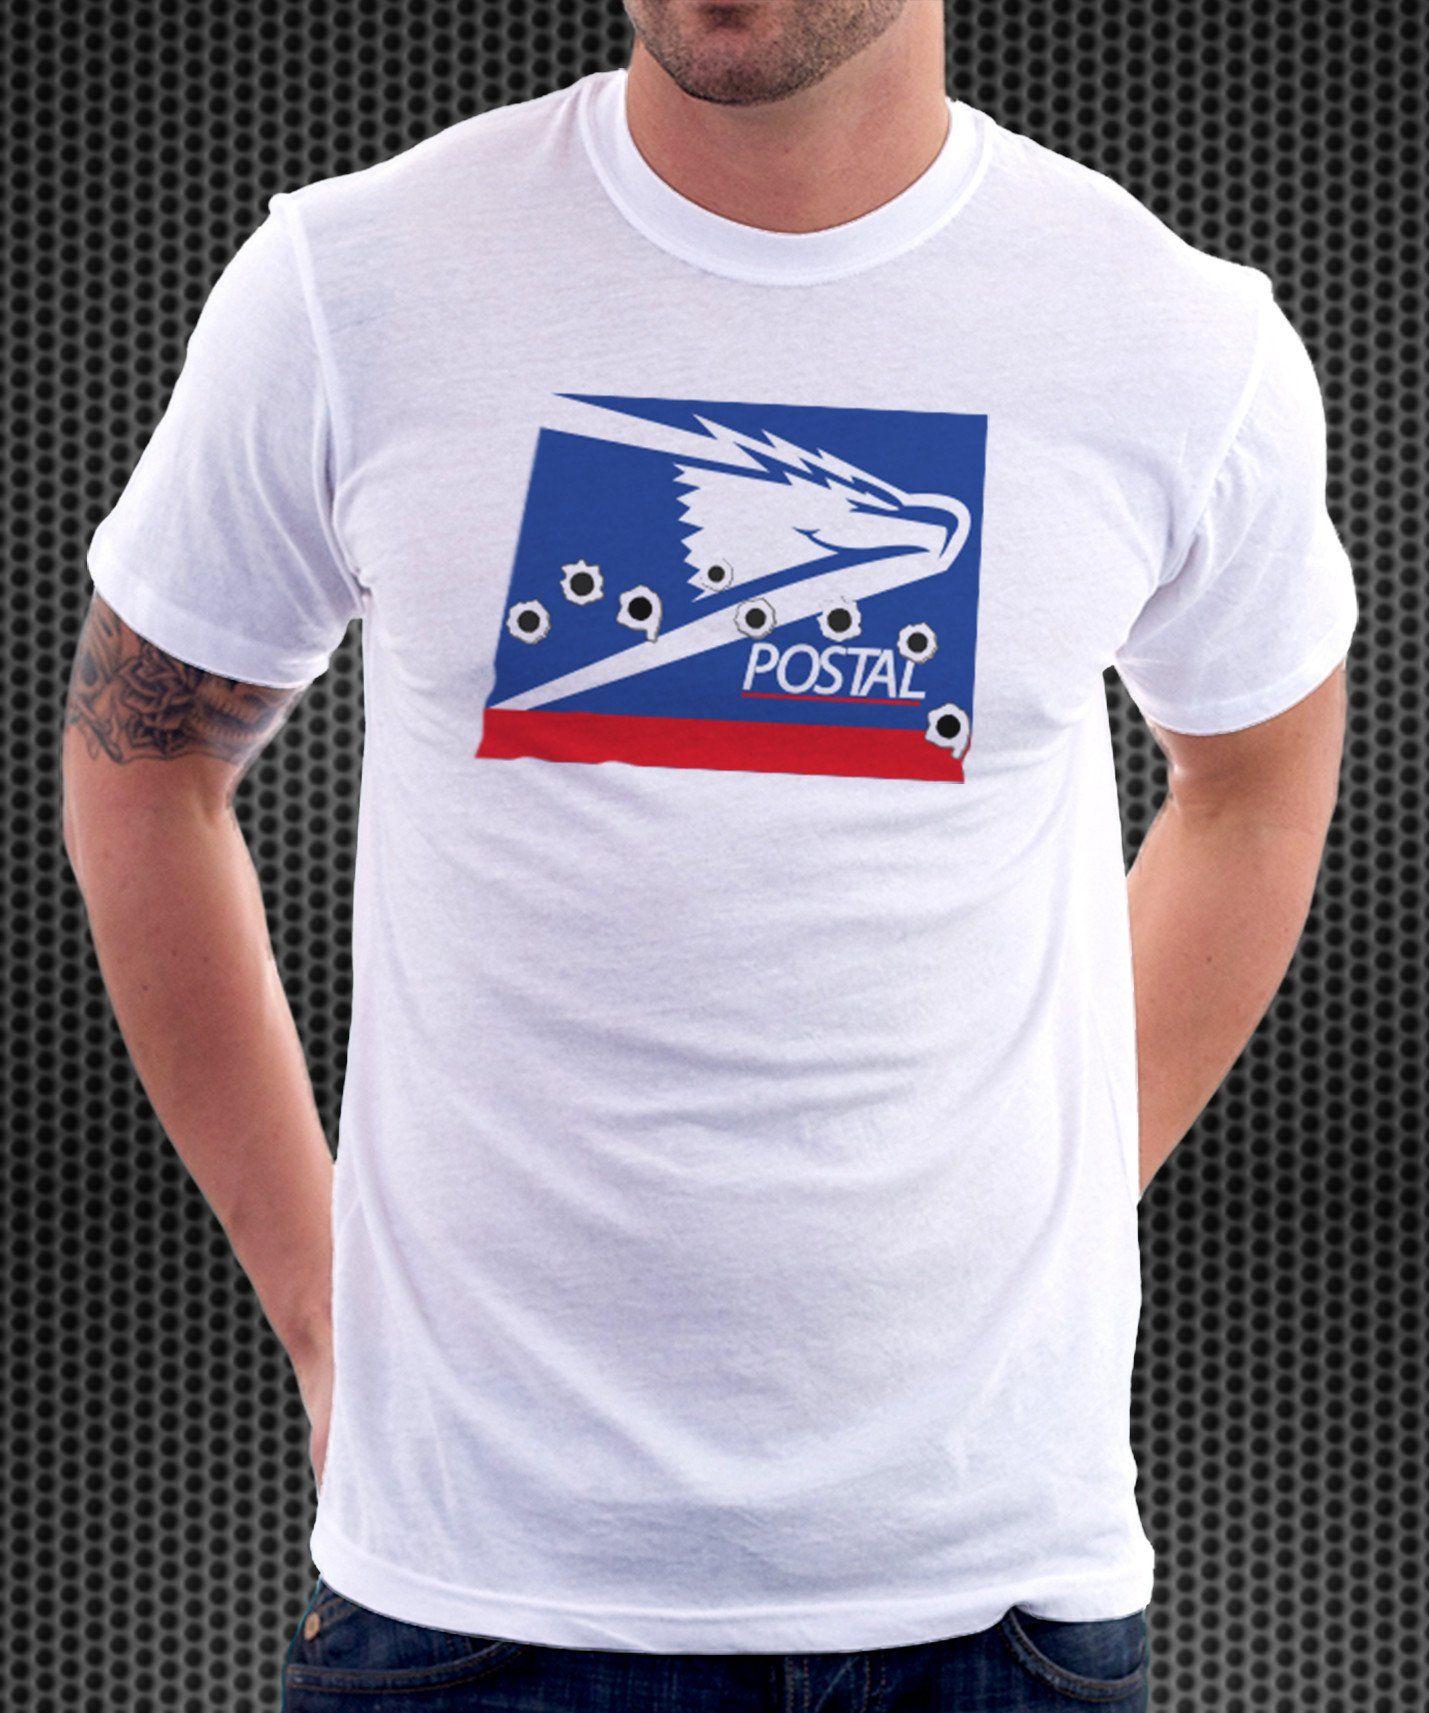 Us Postal Service Logo - USPS US Postal Service Logo Parody Spoof Tshirt: Postal Logo White ...